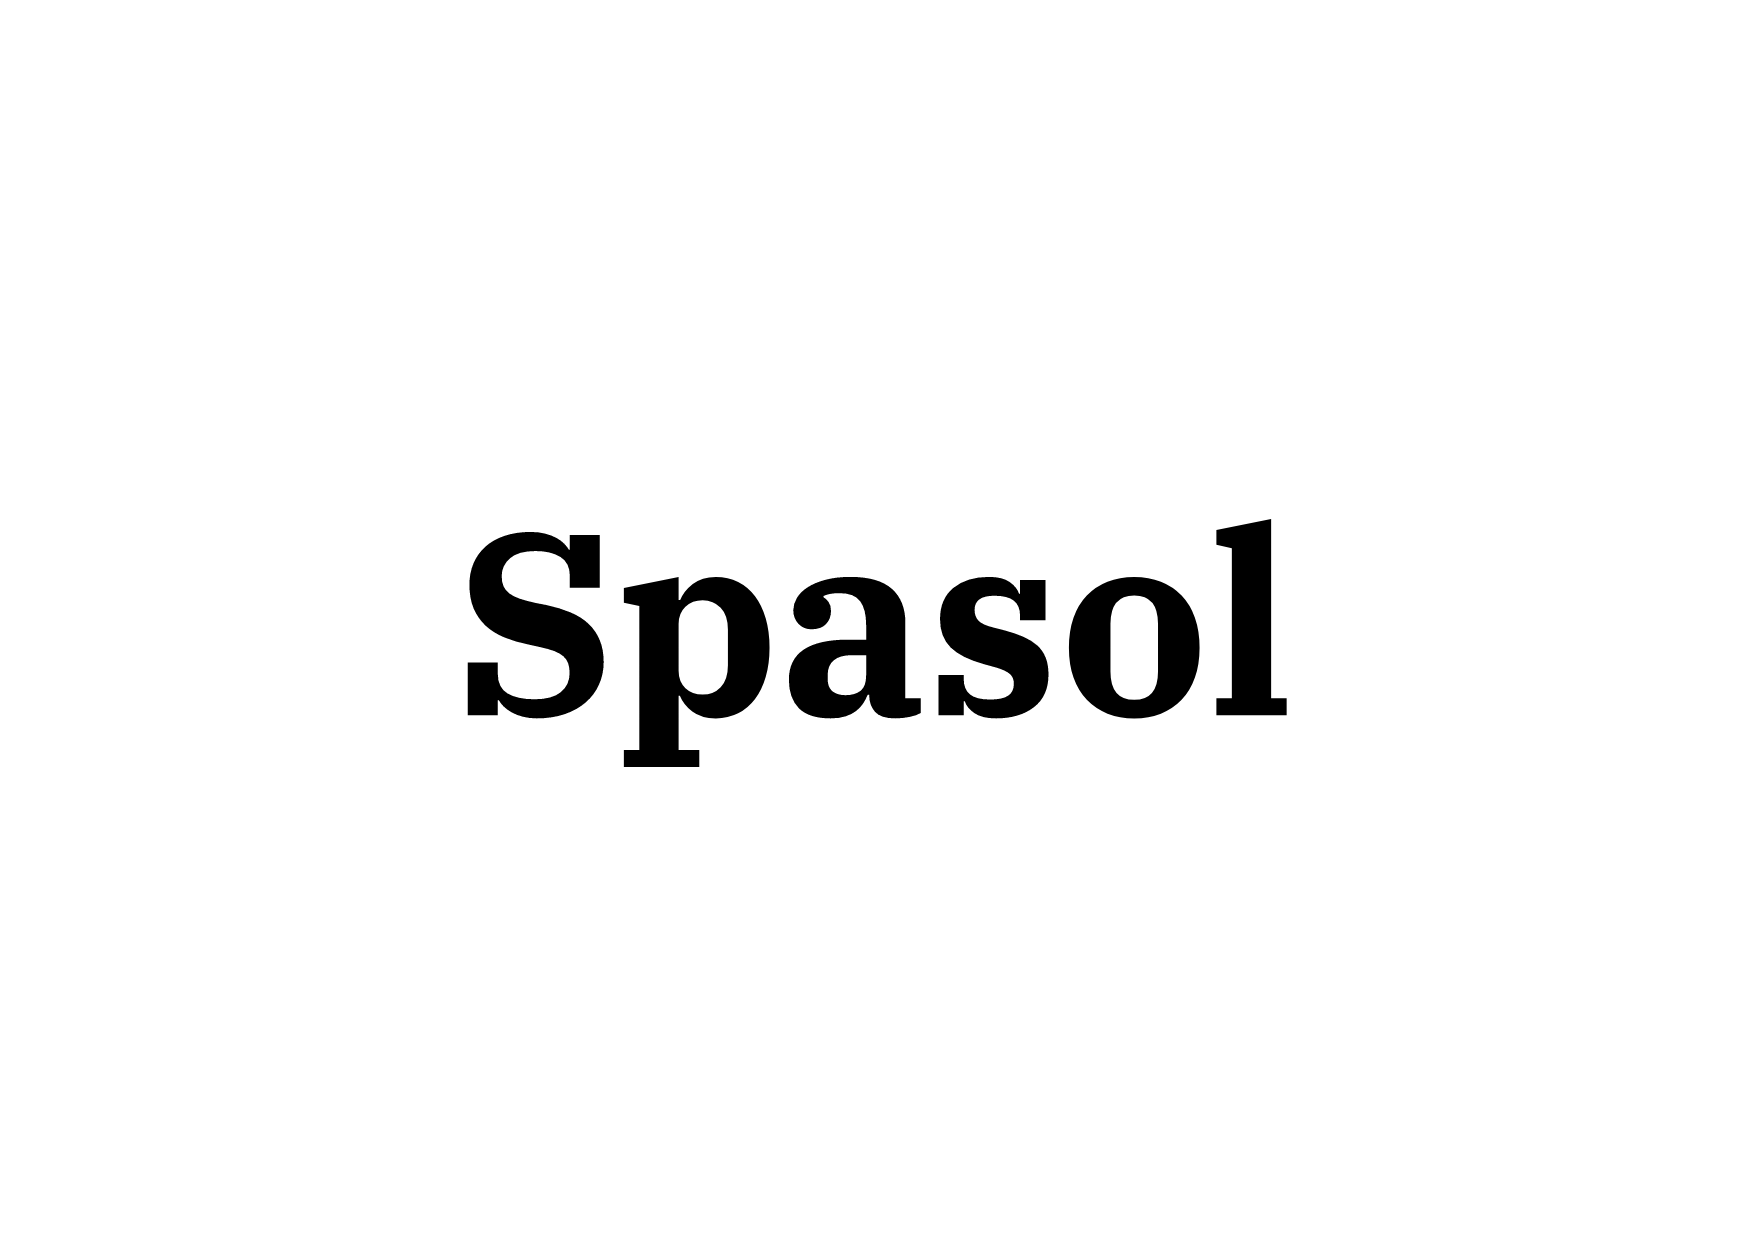 Spasol